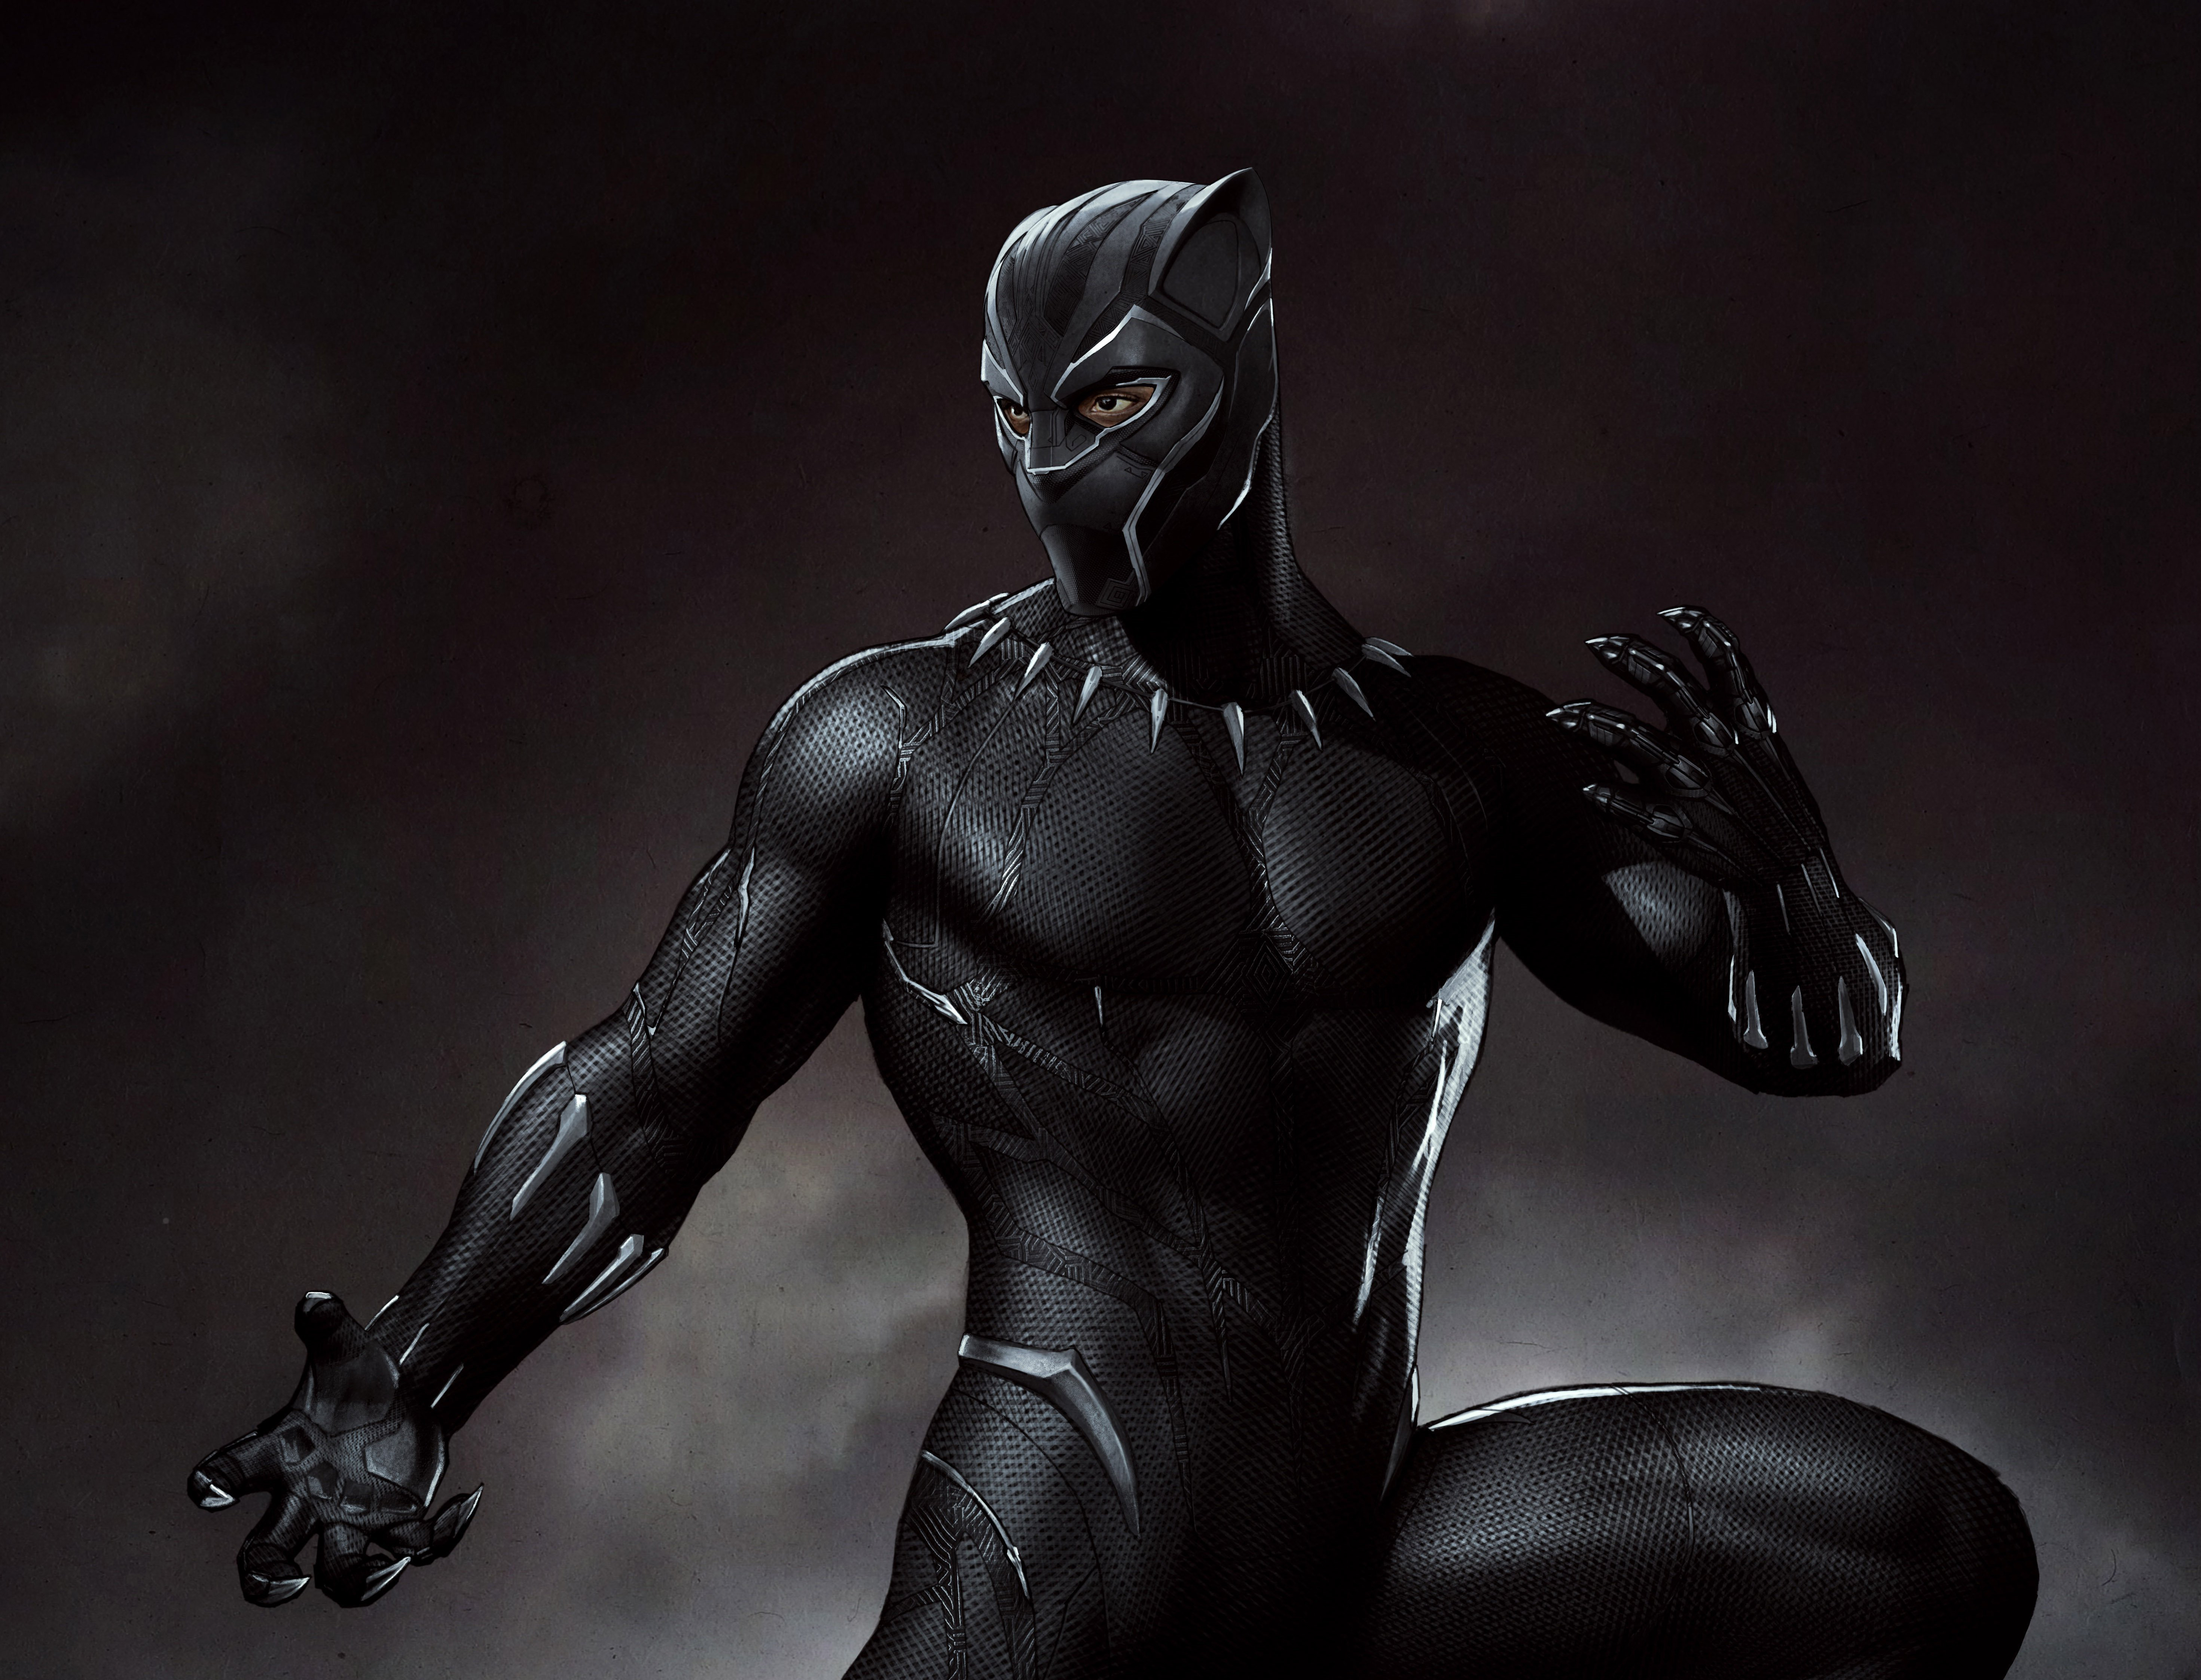 Black Panther 4k Ultra HD Wallpaper by Ryan Meinerding